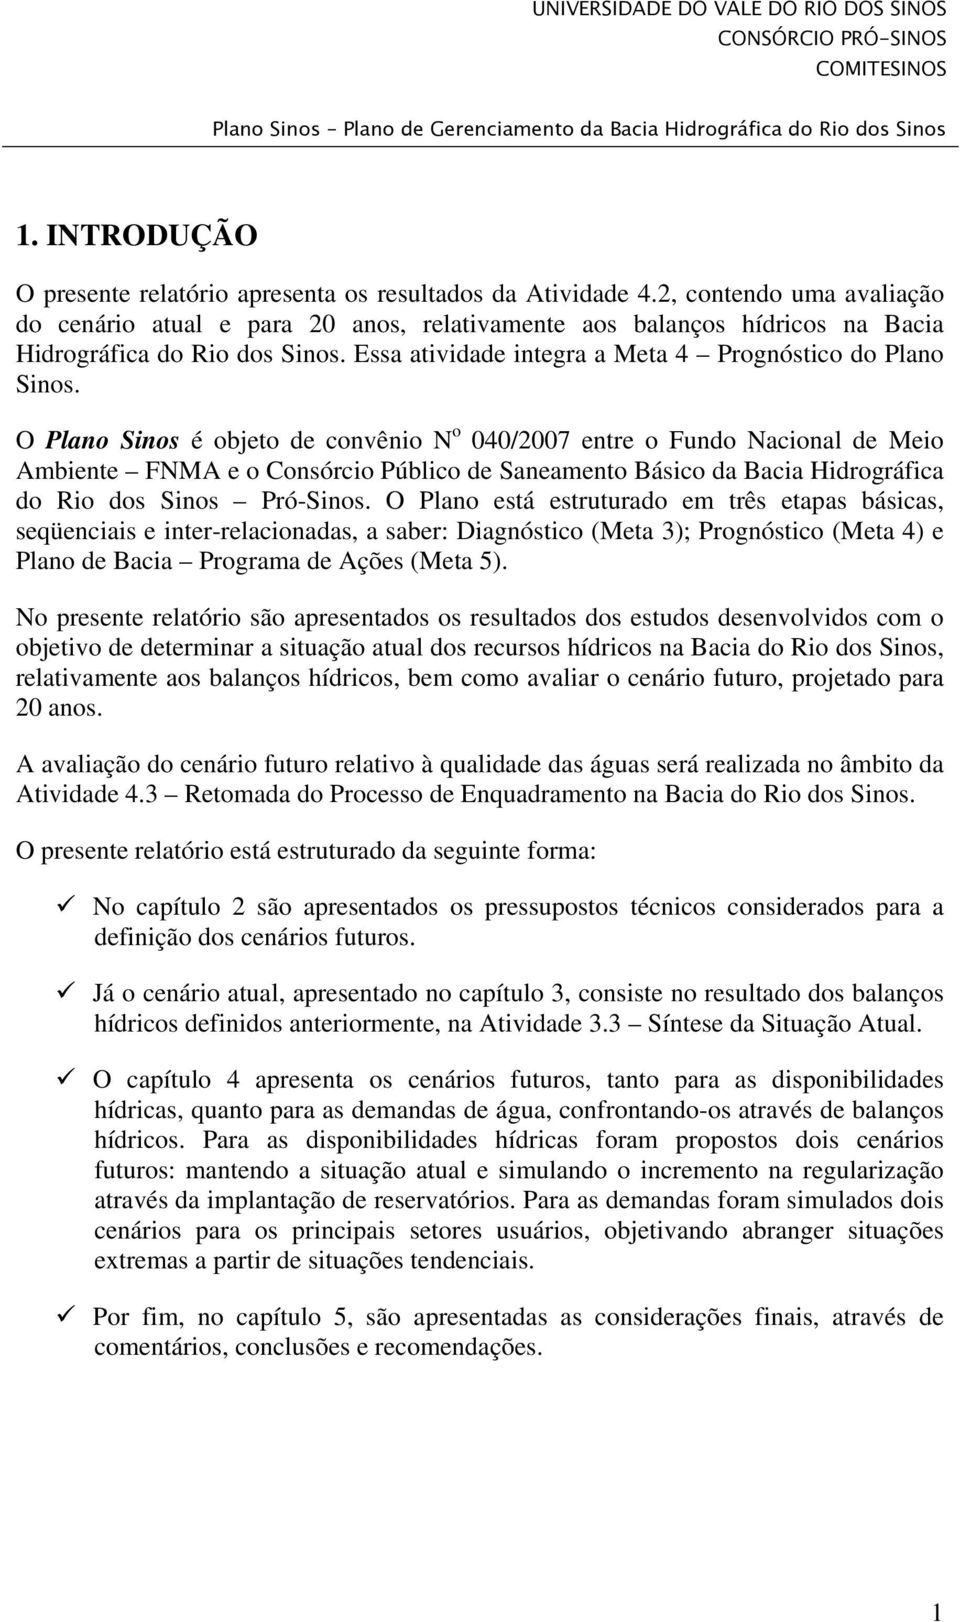 O Plano Sinos é objeto de convênio N o 040/2007 entre o Fundo Nacional de Meio Ambiente FNMA e o Consórcio Público de Saneamento Básico da Bacia Hidrográfica do Rio dos Sinos Pró-Sinos.